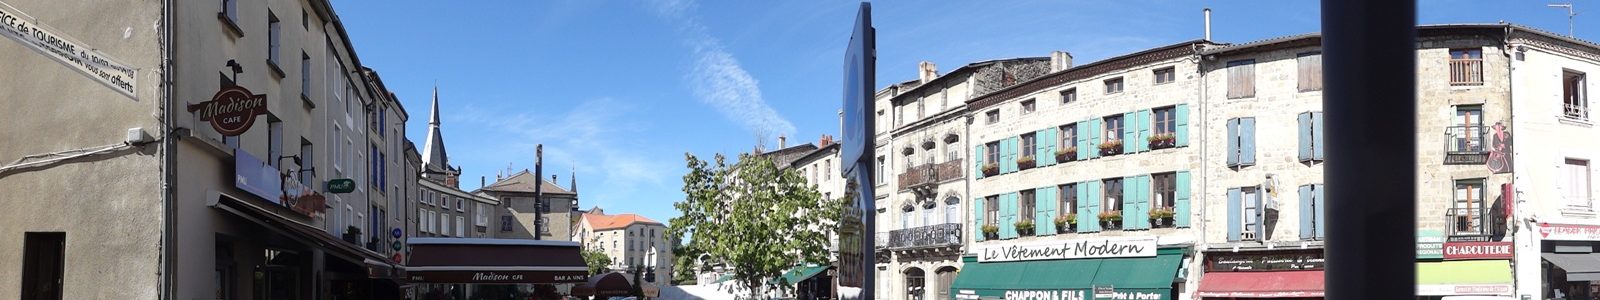 Faubourg Constant - Vue panoramique